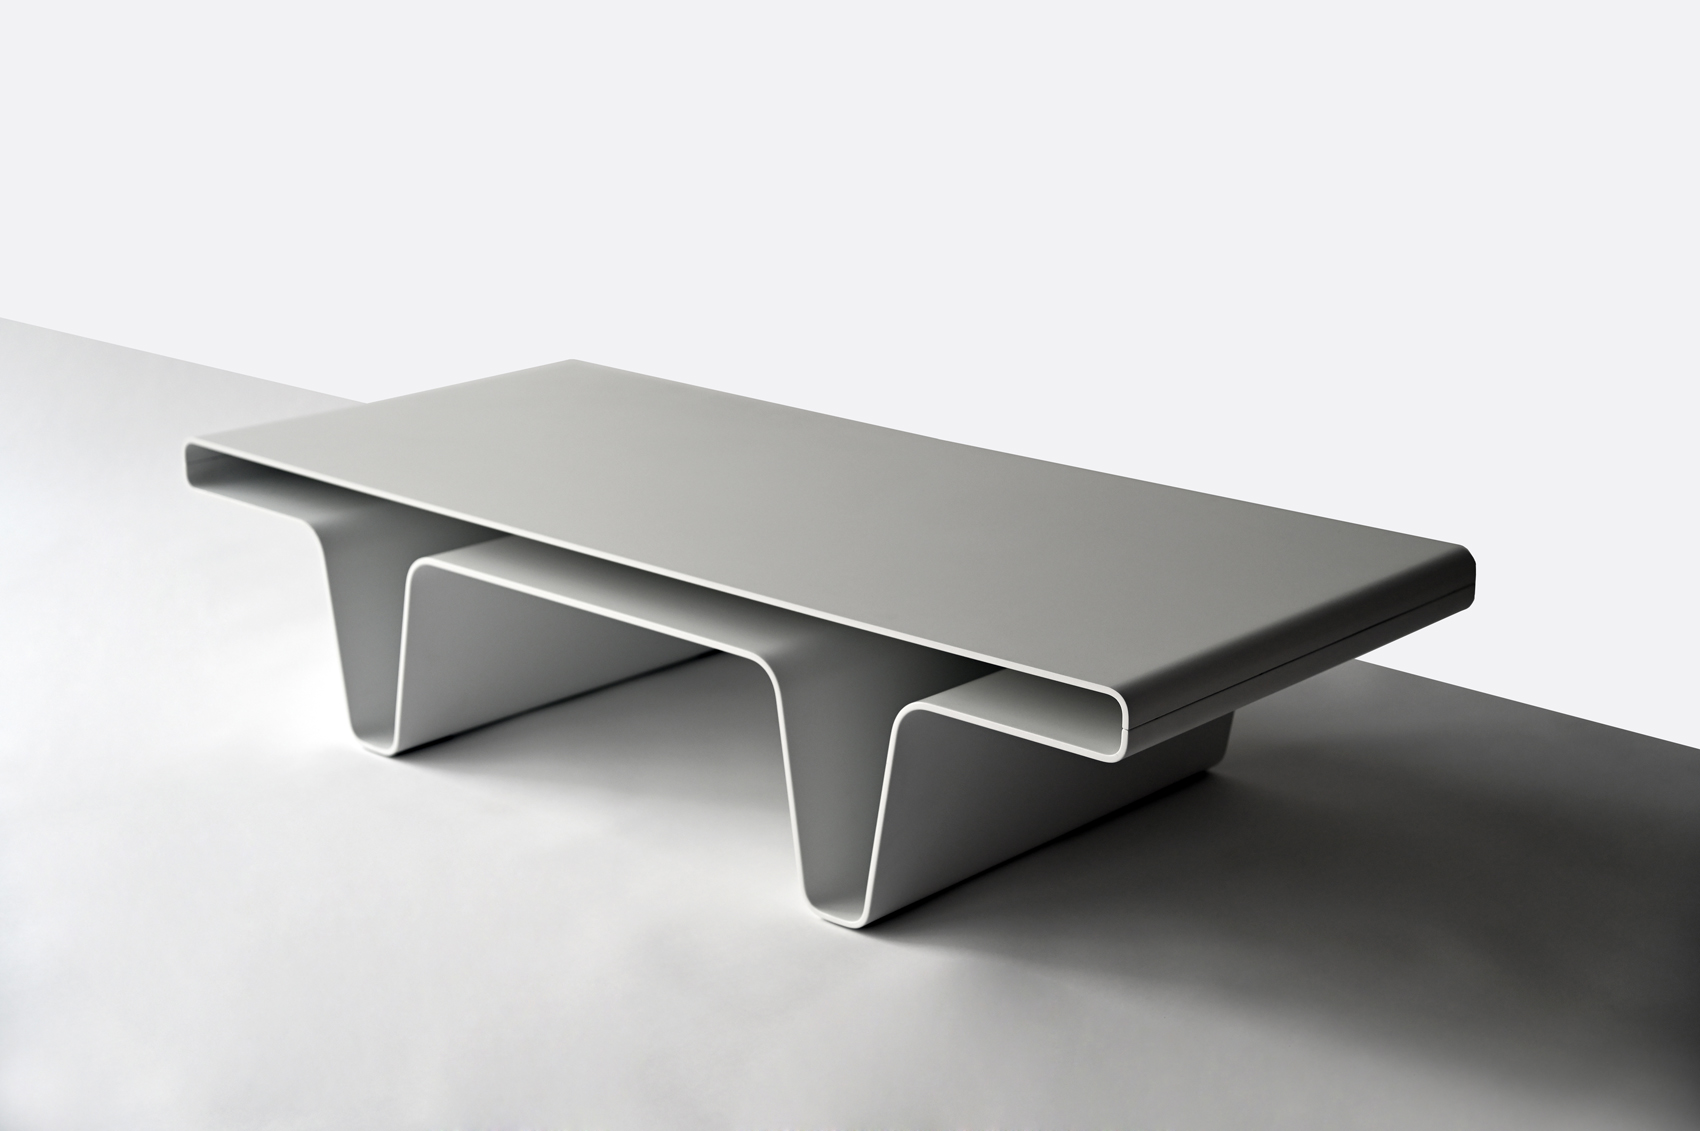 jan goderis design lab_BEND coffee table_ph Sonny Plasschaert_6-7e1bea20